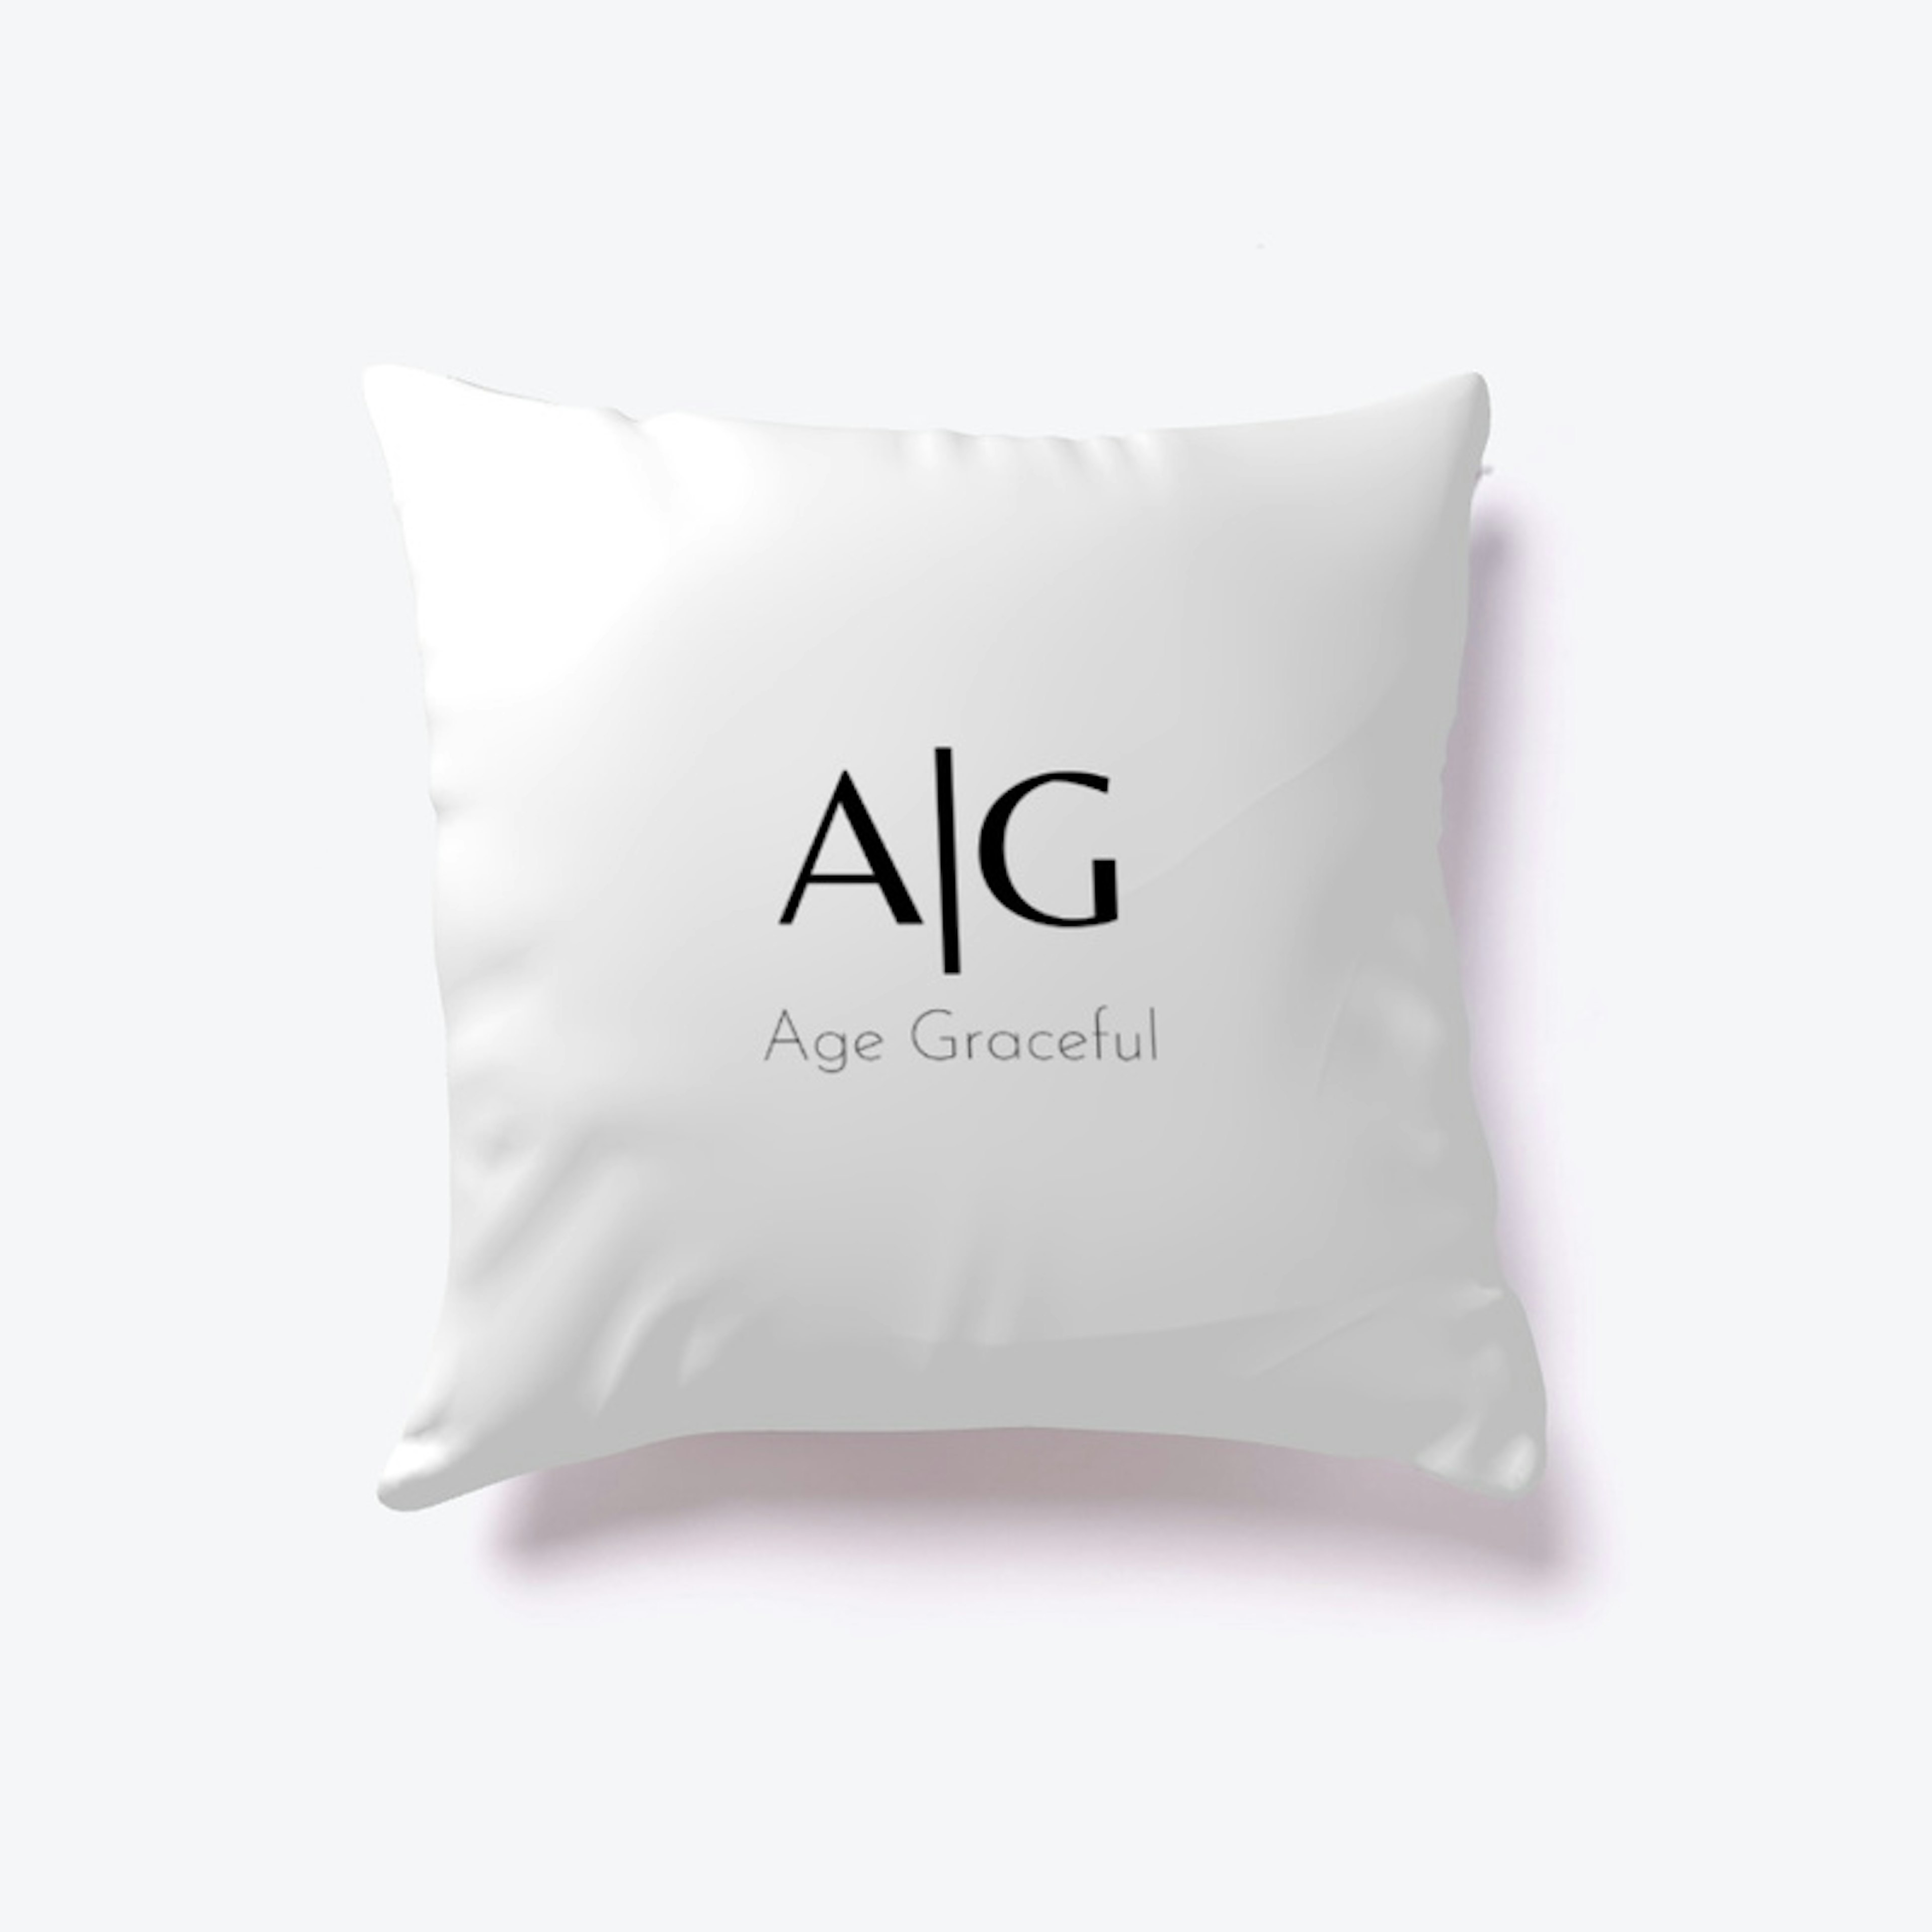 Age Graceful Decorative Pillow